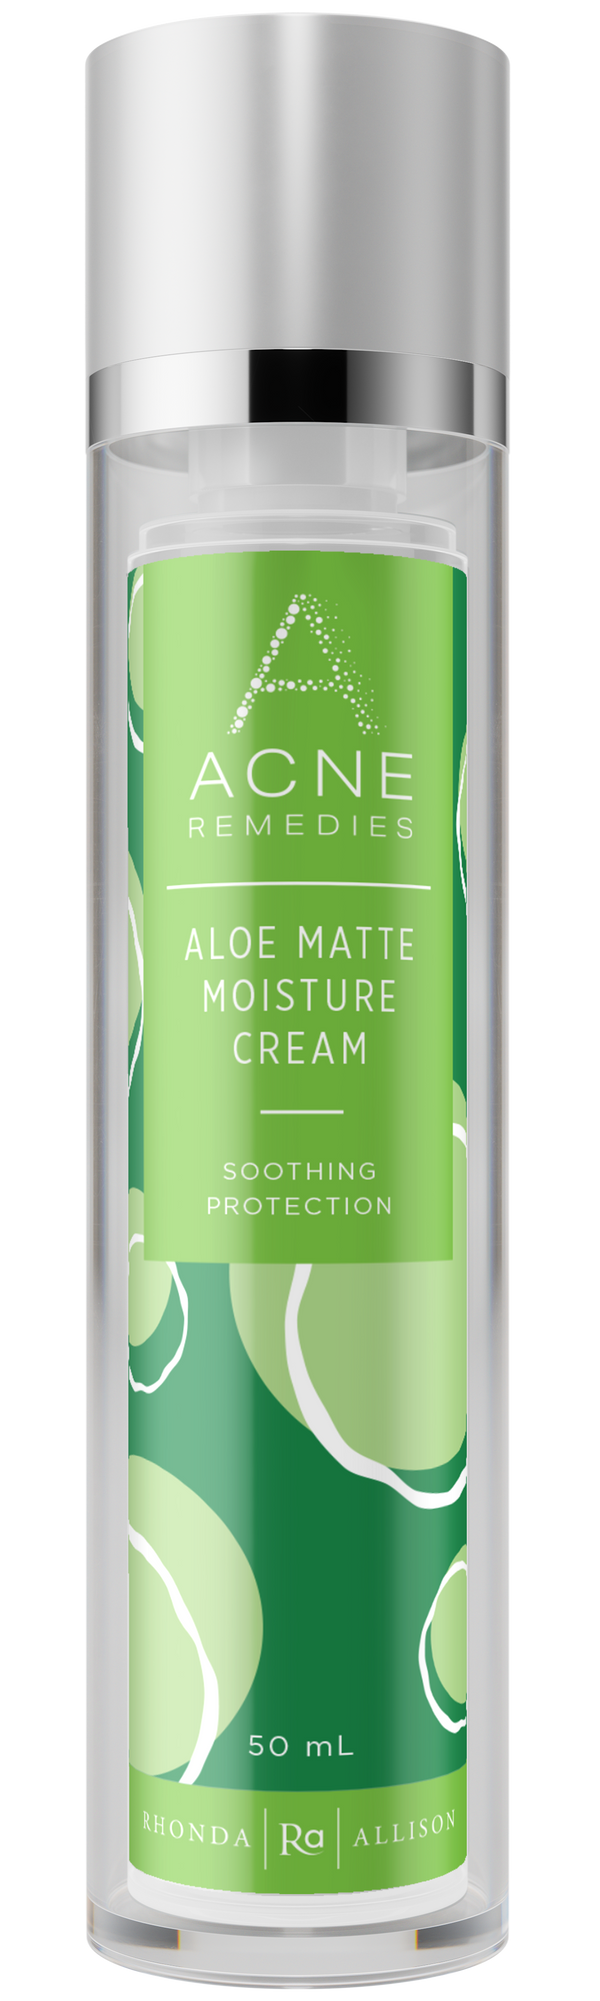 Aloe Matte Moisturizer Cream